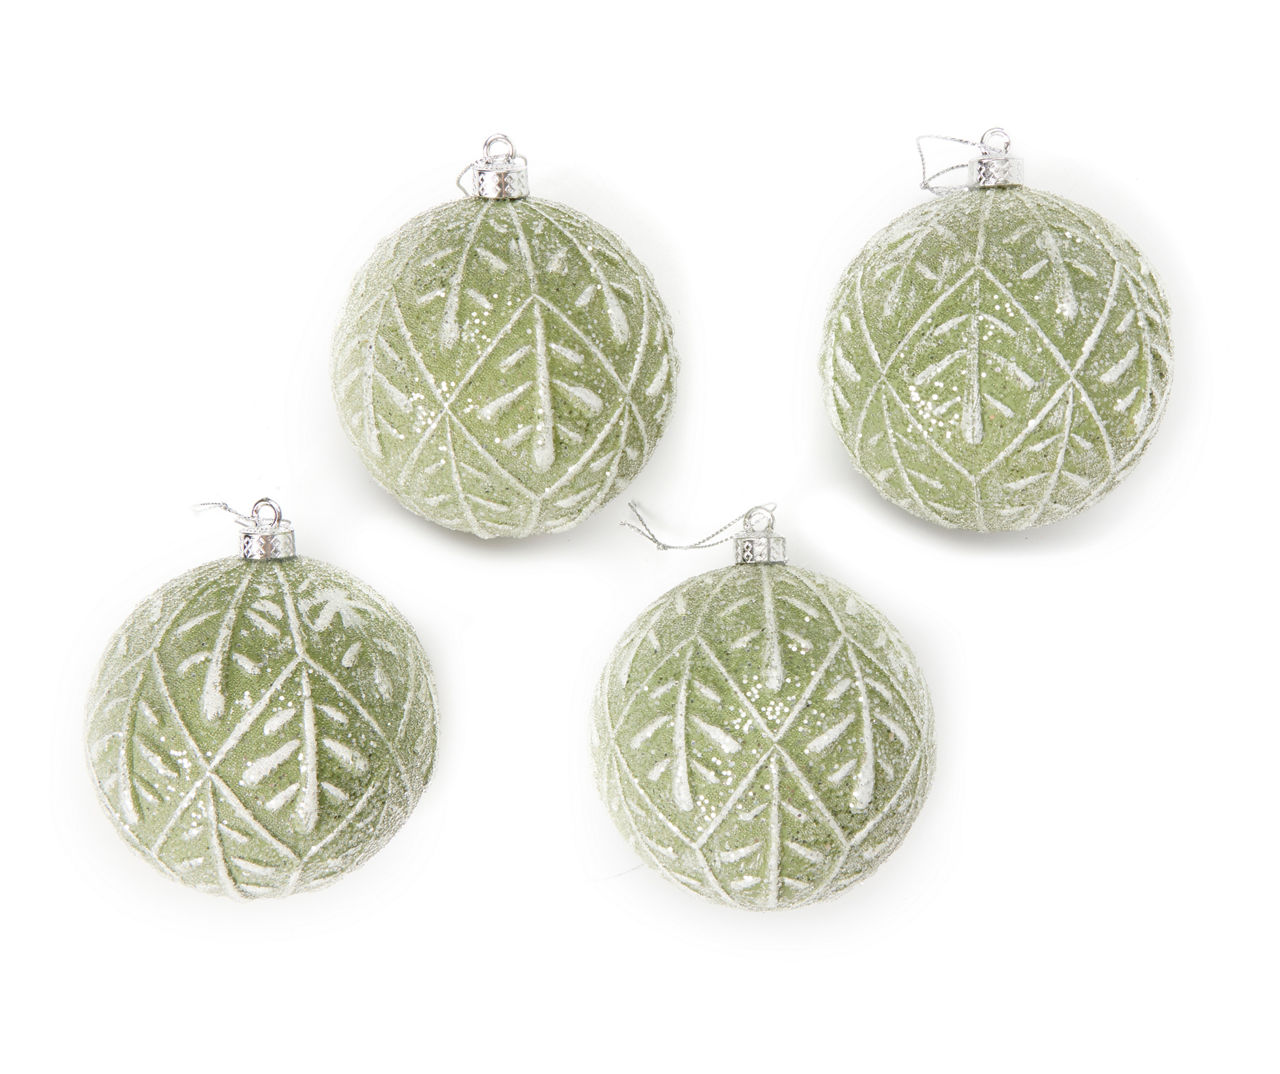 Light Green Leaf Glitter Ball Ornaments, 4-Pack